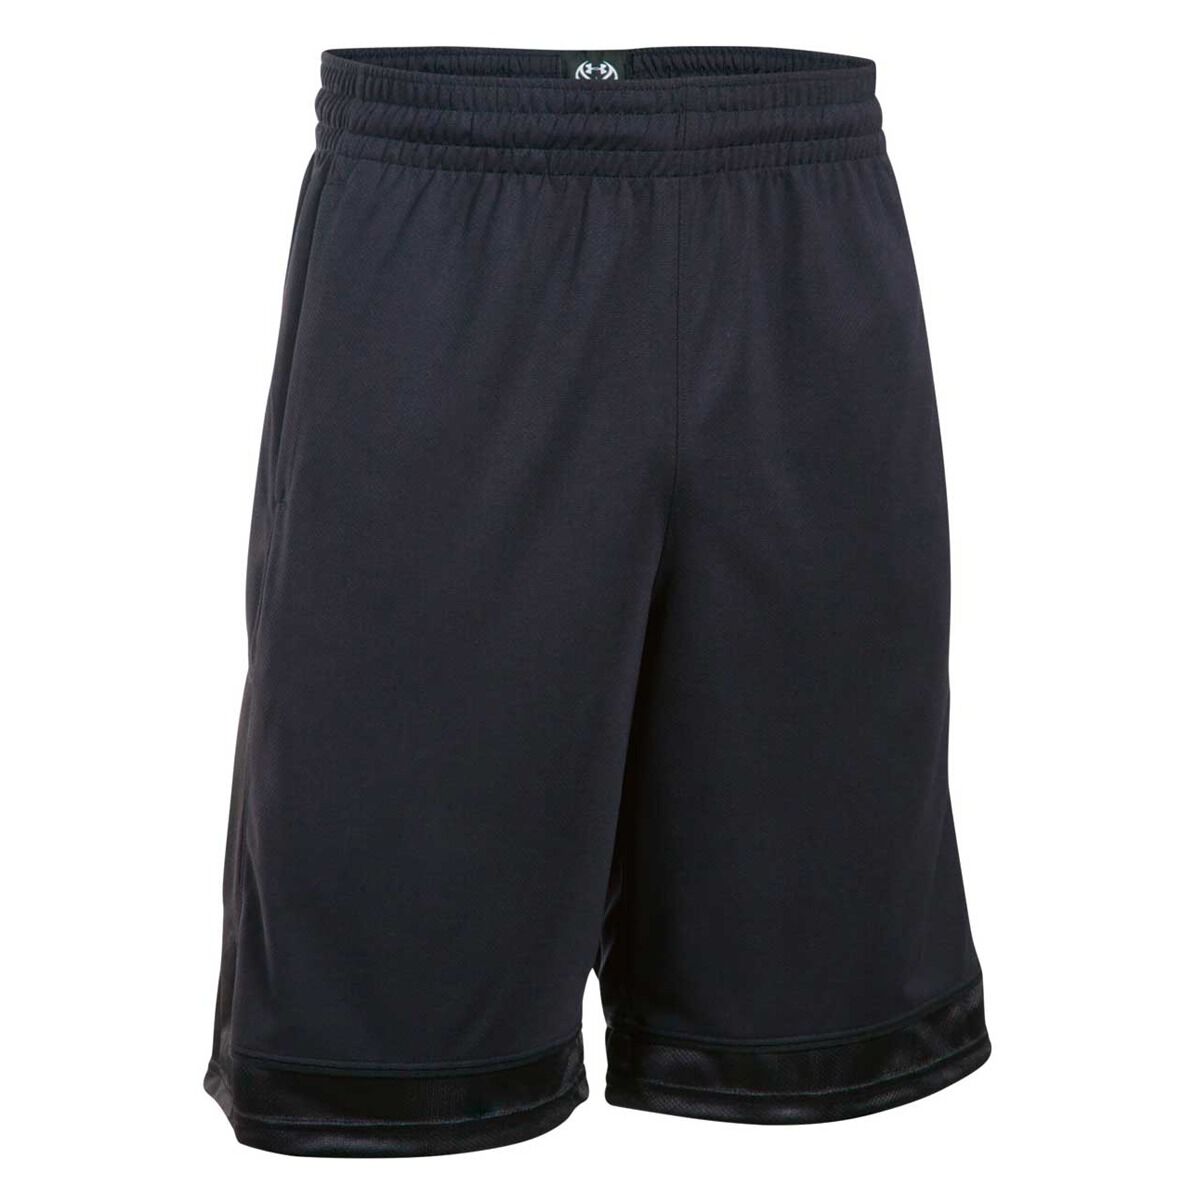 basketball black shorts